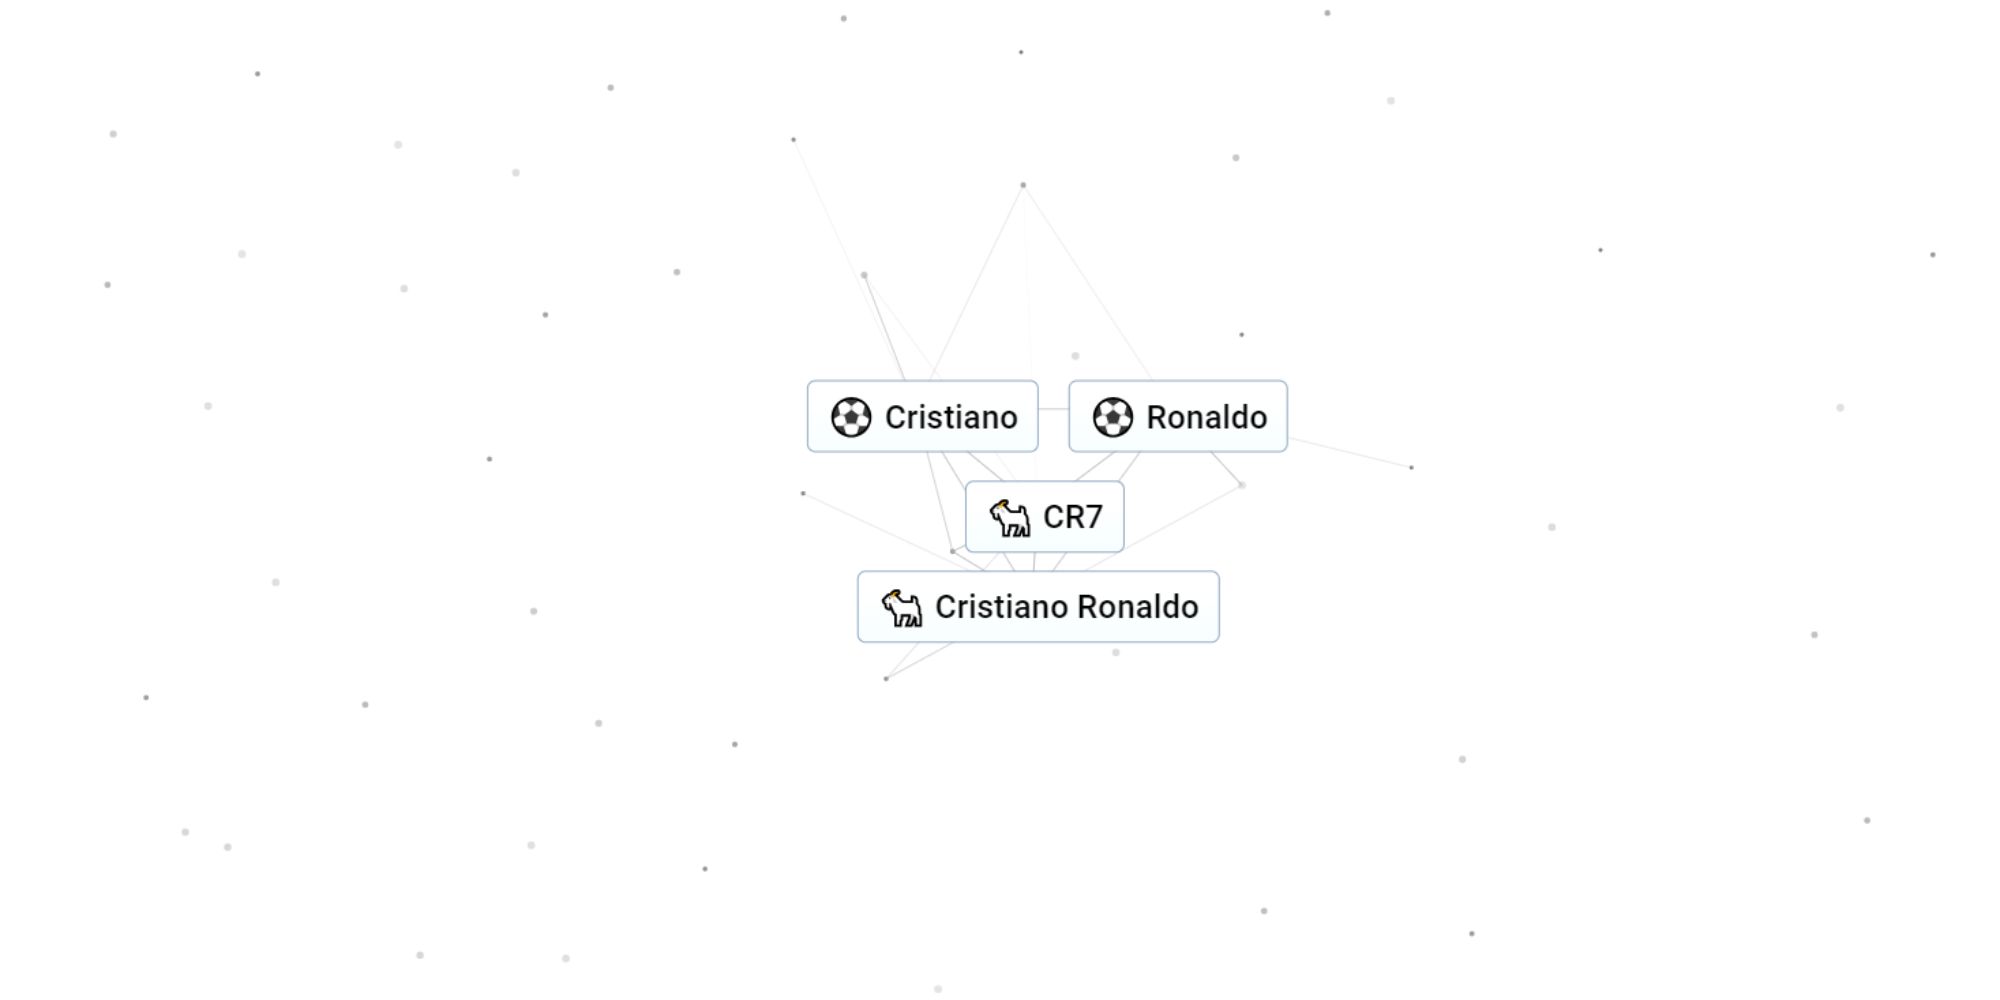 Infinite Craft, Cristiano, Ronaldo and CR7